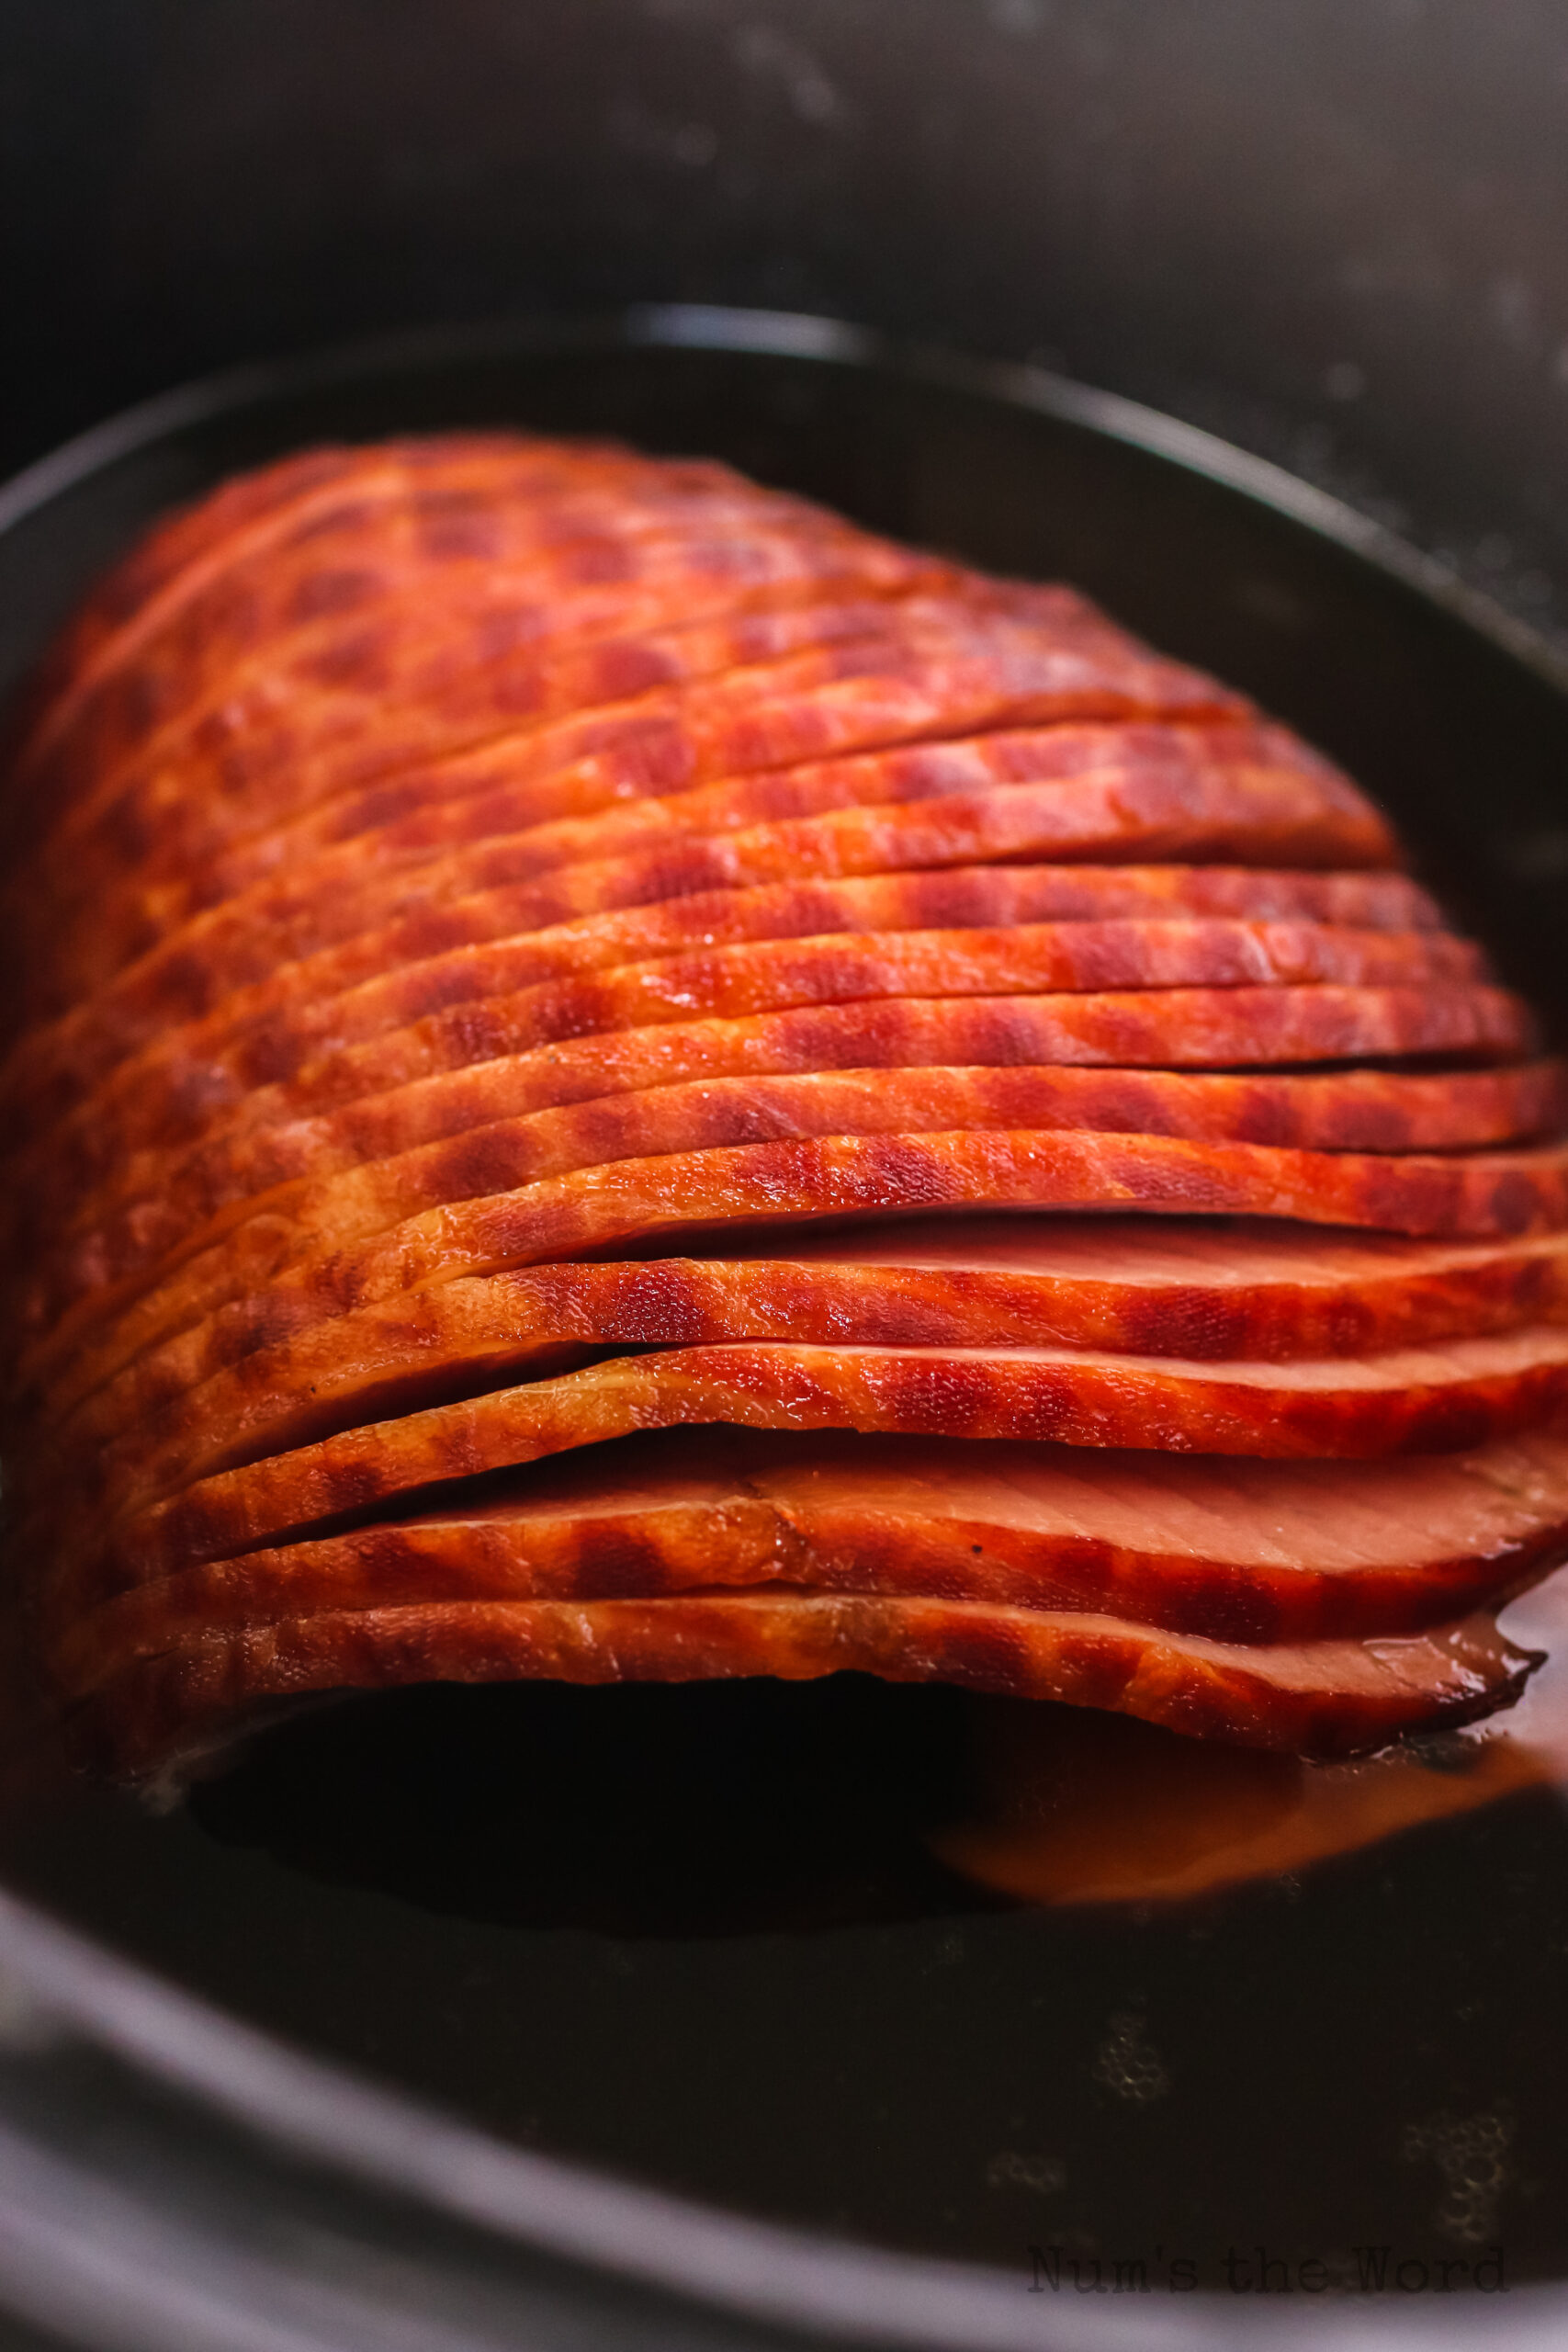 baked ham in crock pot, zoomed in image